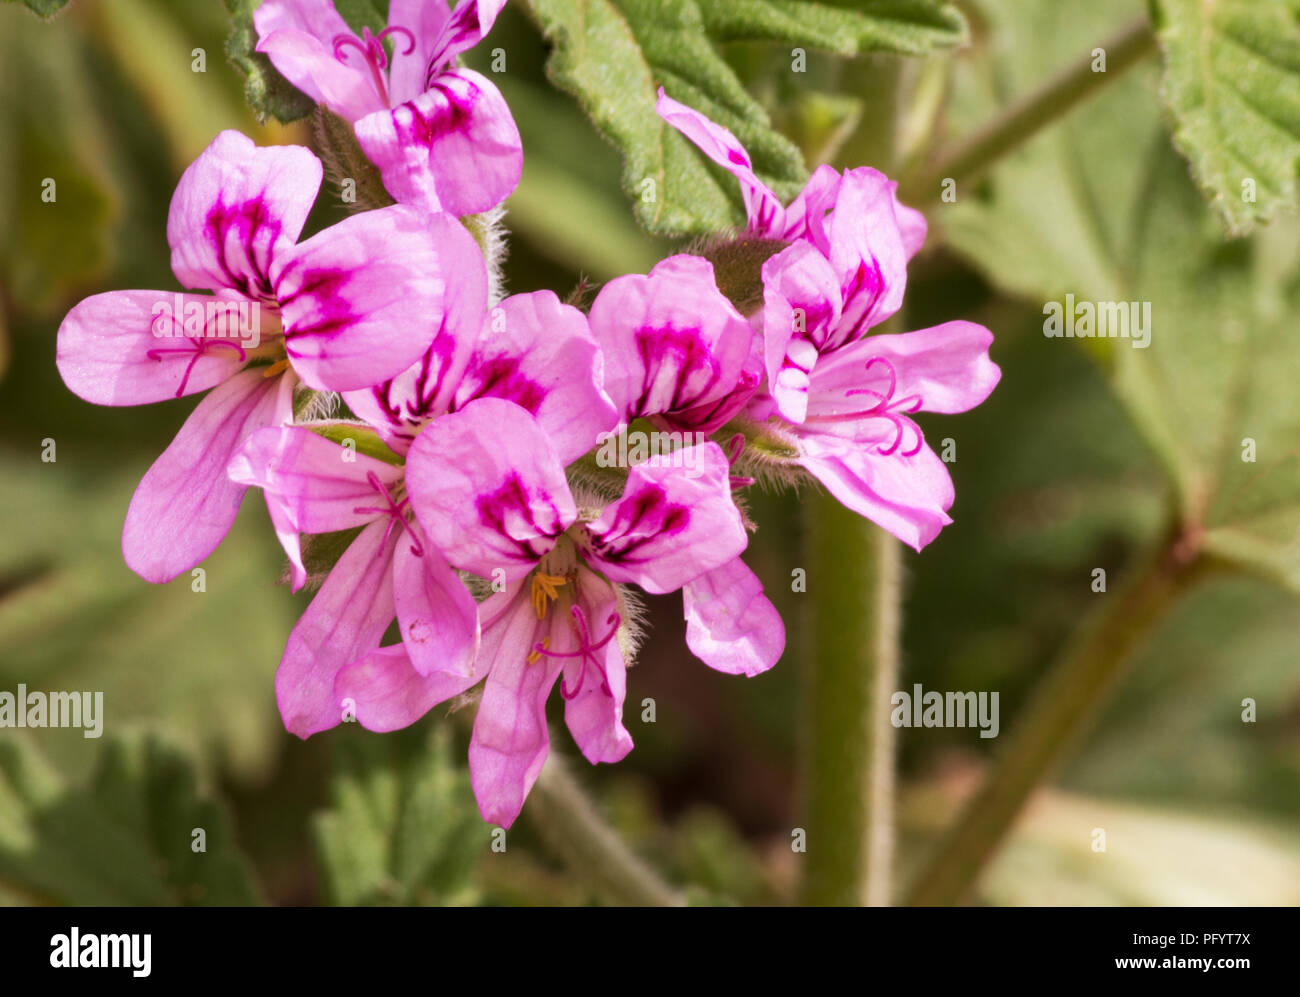 Dulce perfumado fotografías e imágenes de alta resolución - Alamy